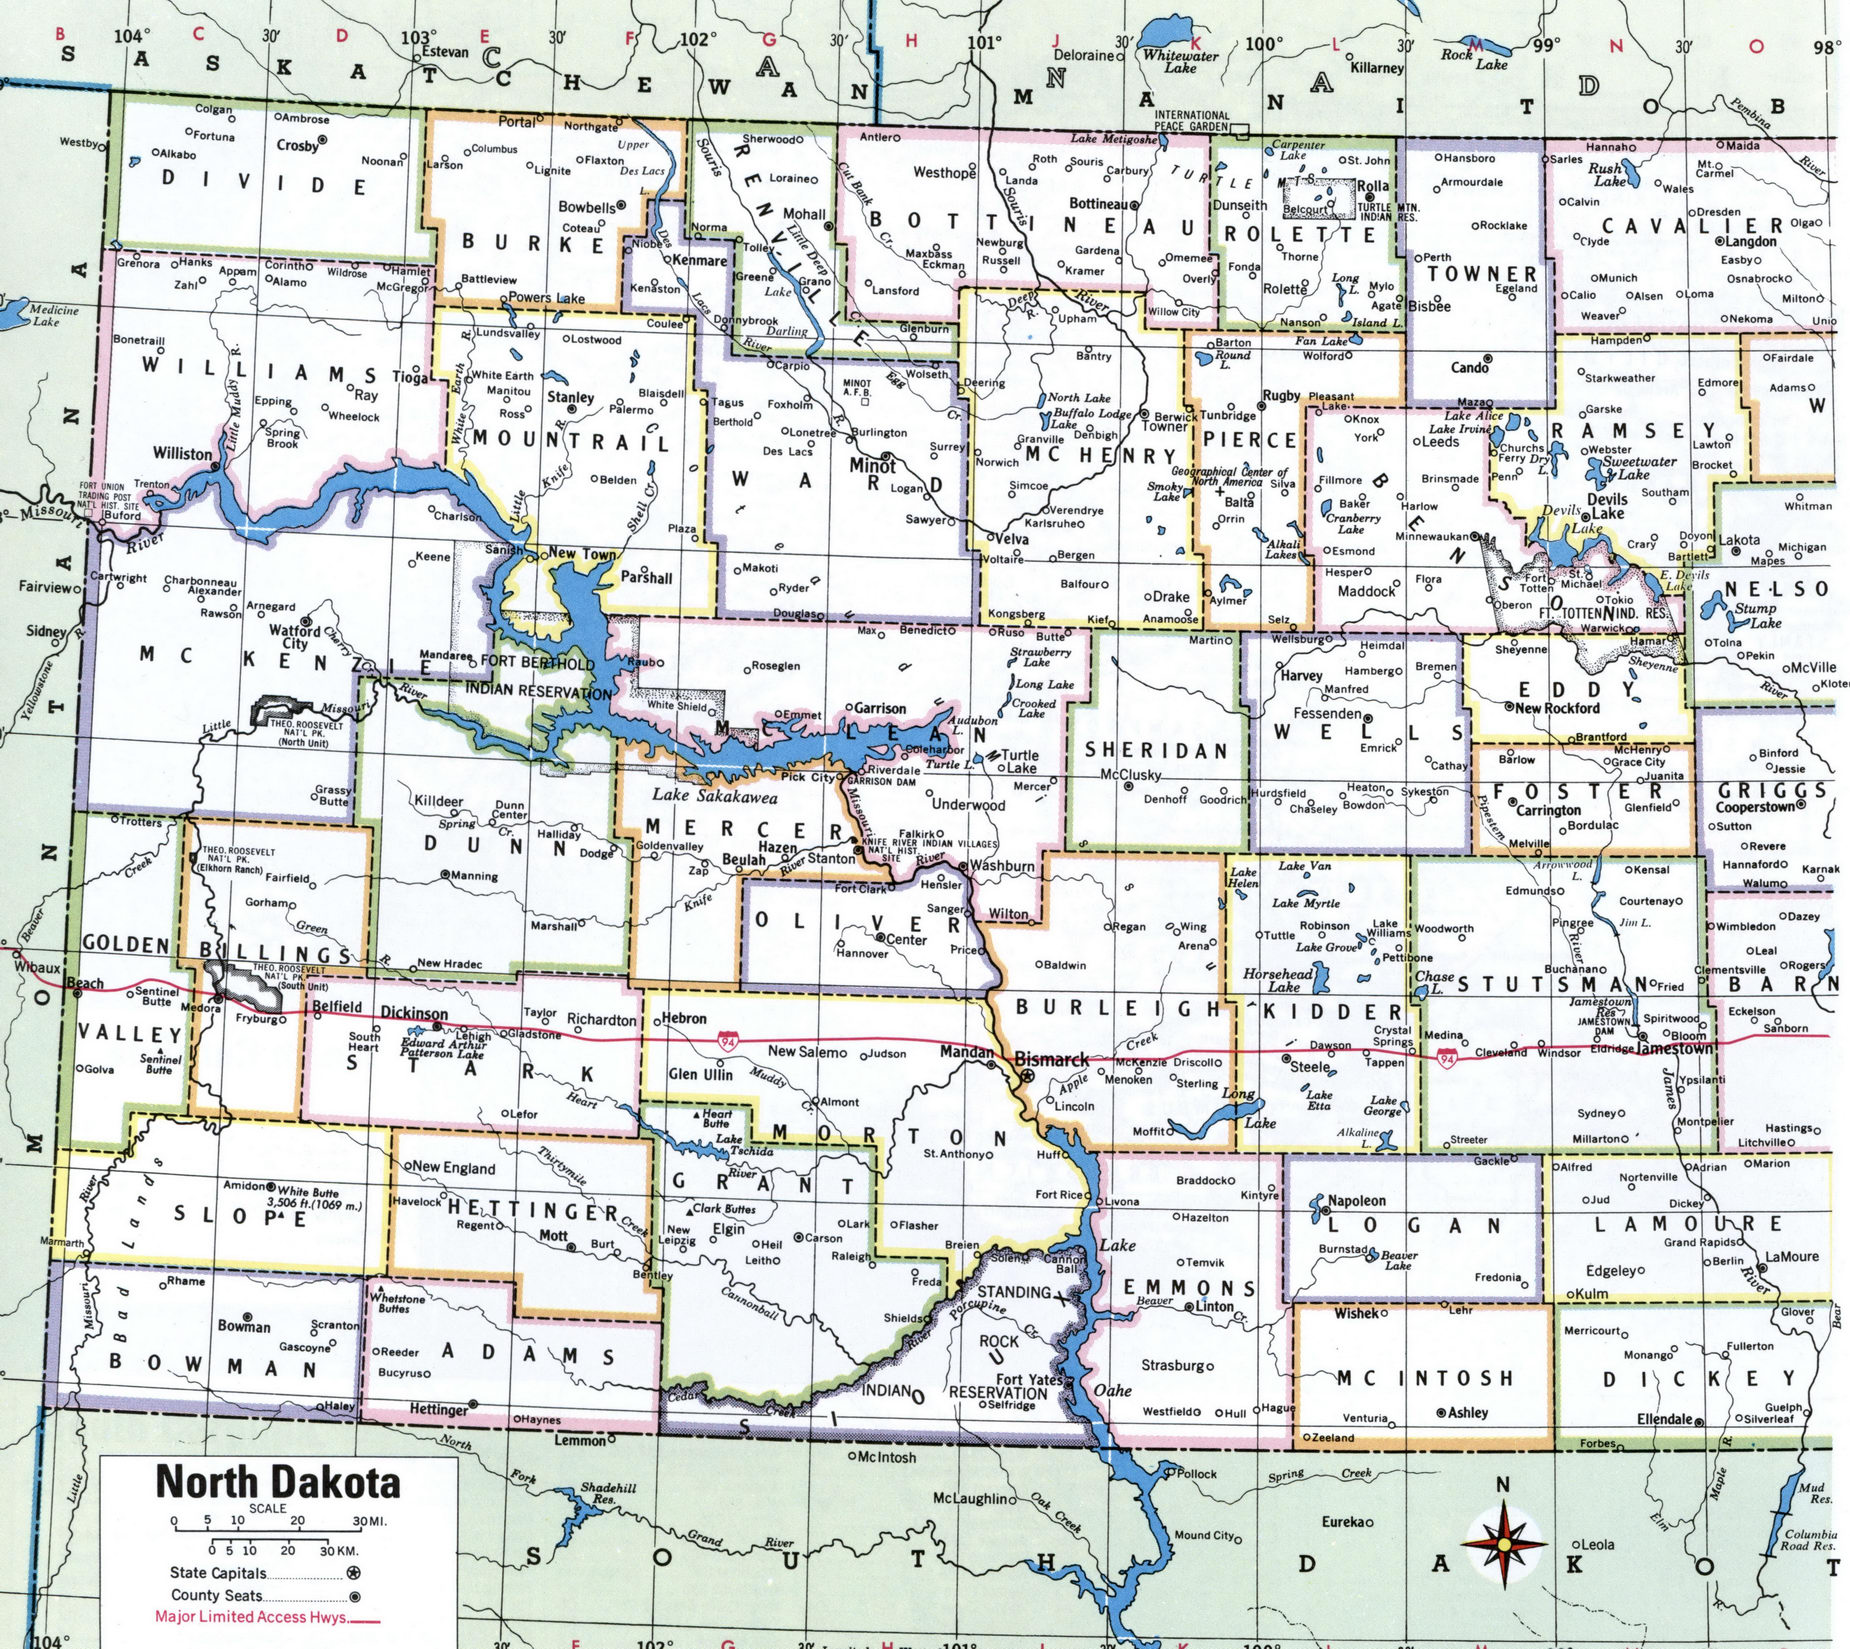 Map of North Dakota by county